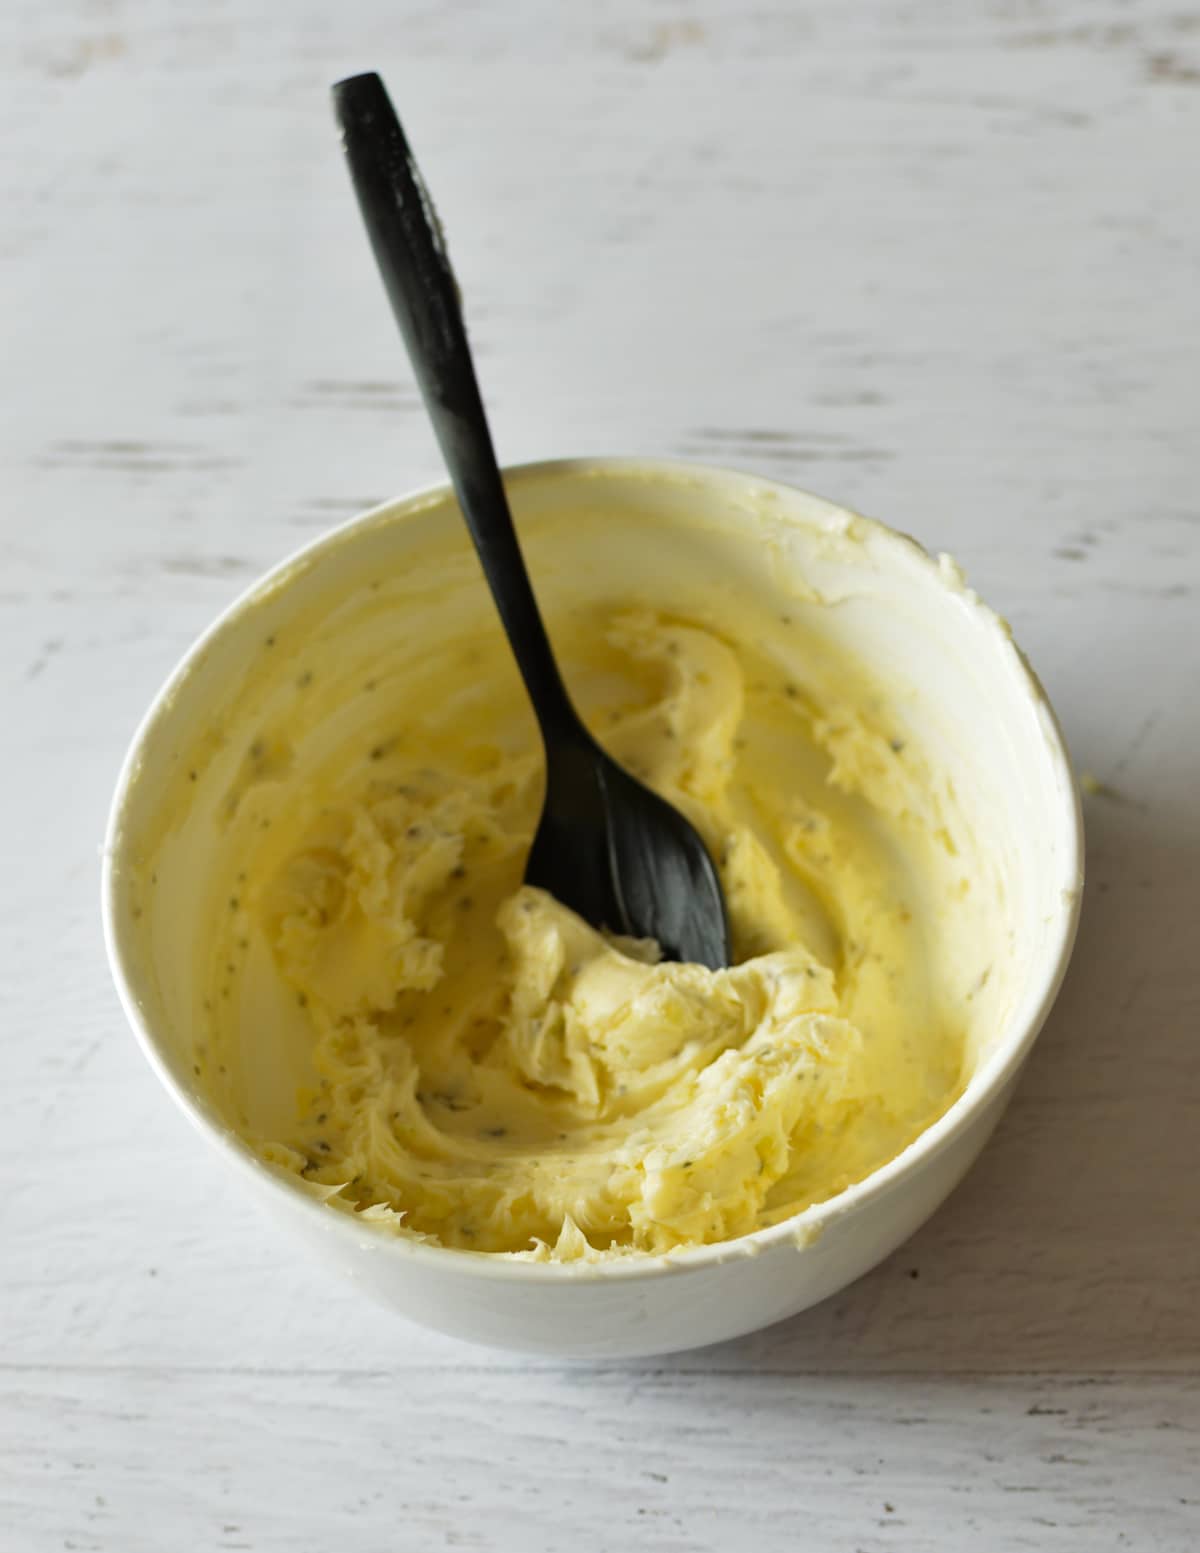 garlic butter in a bowl.